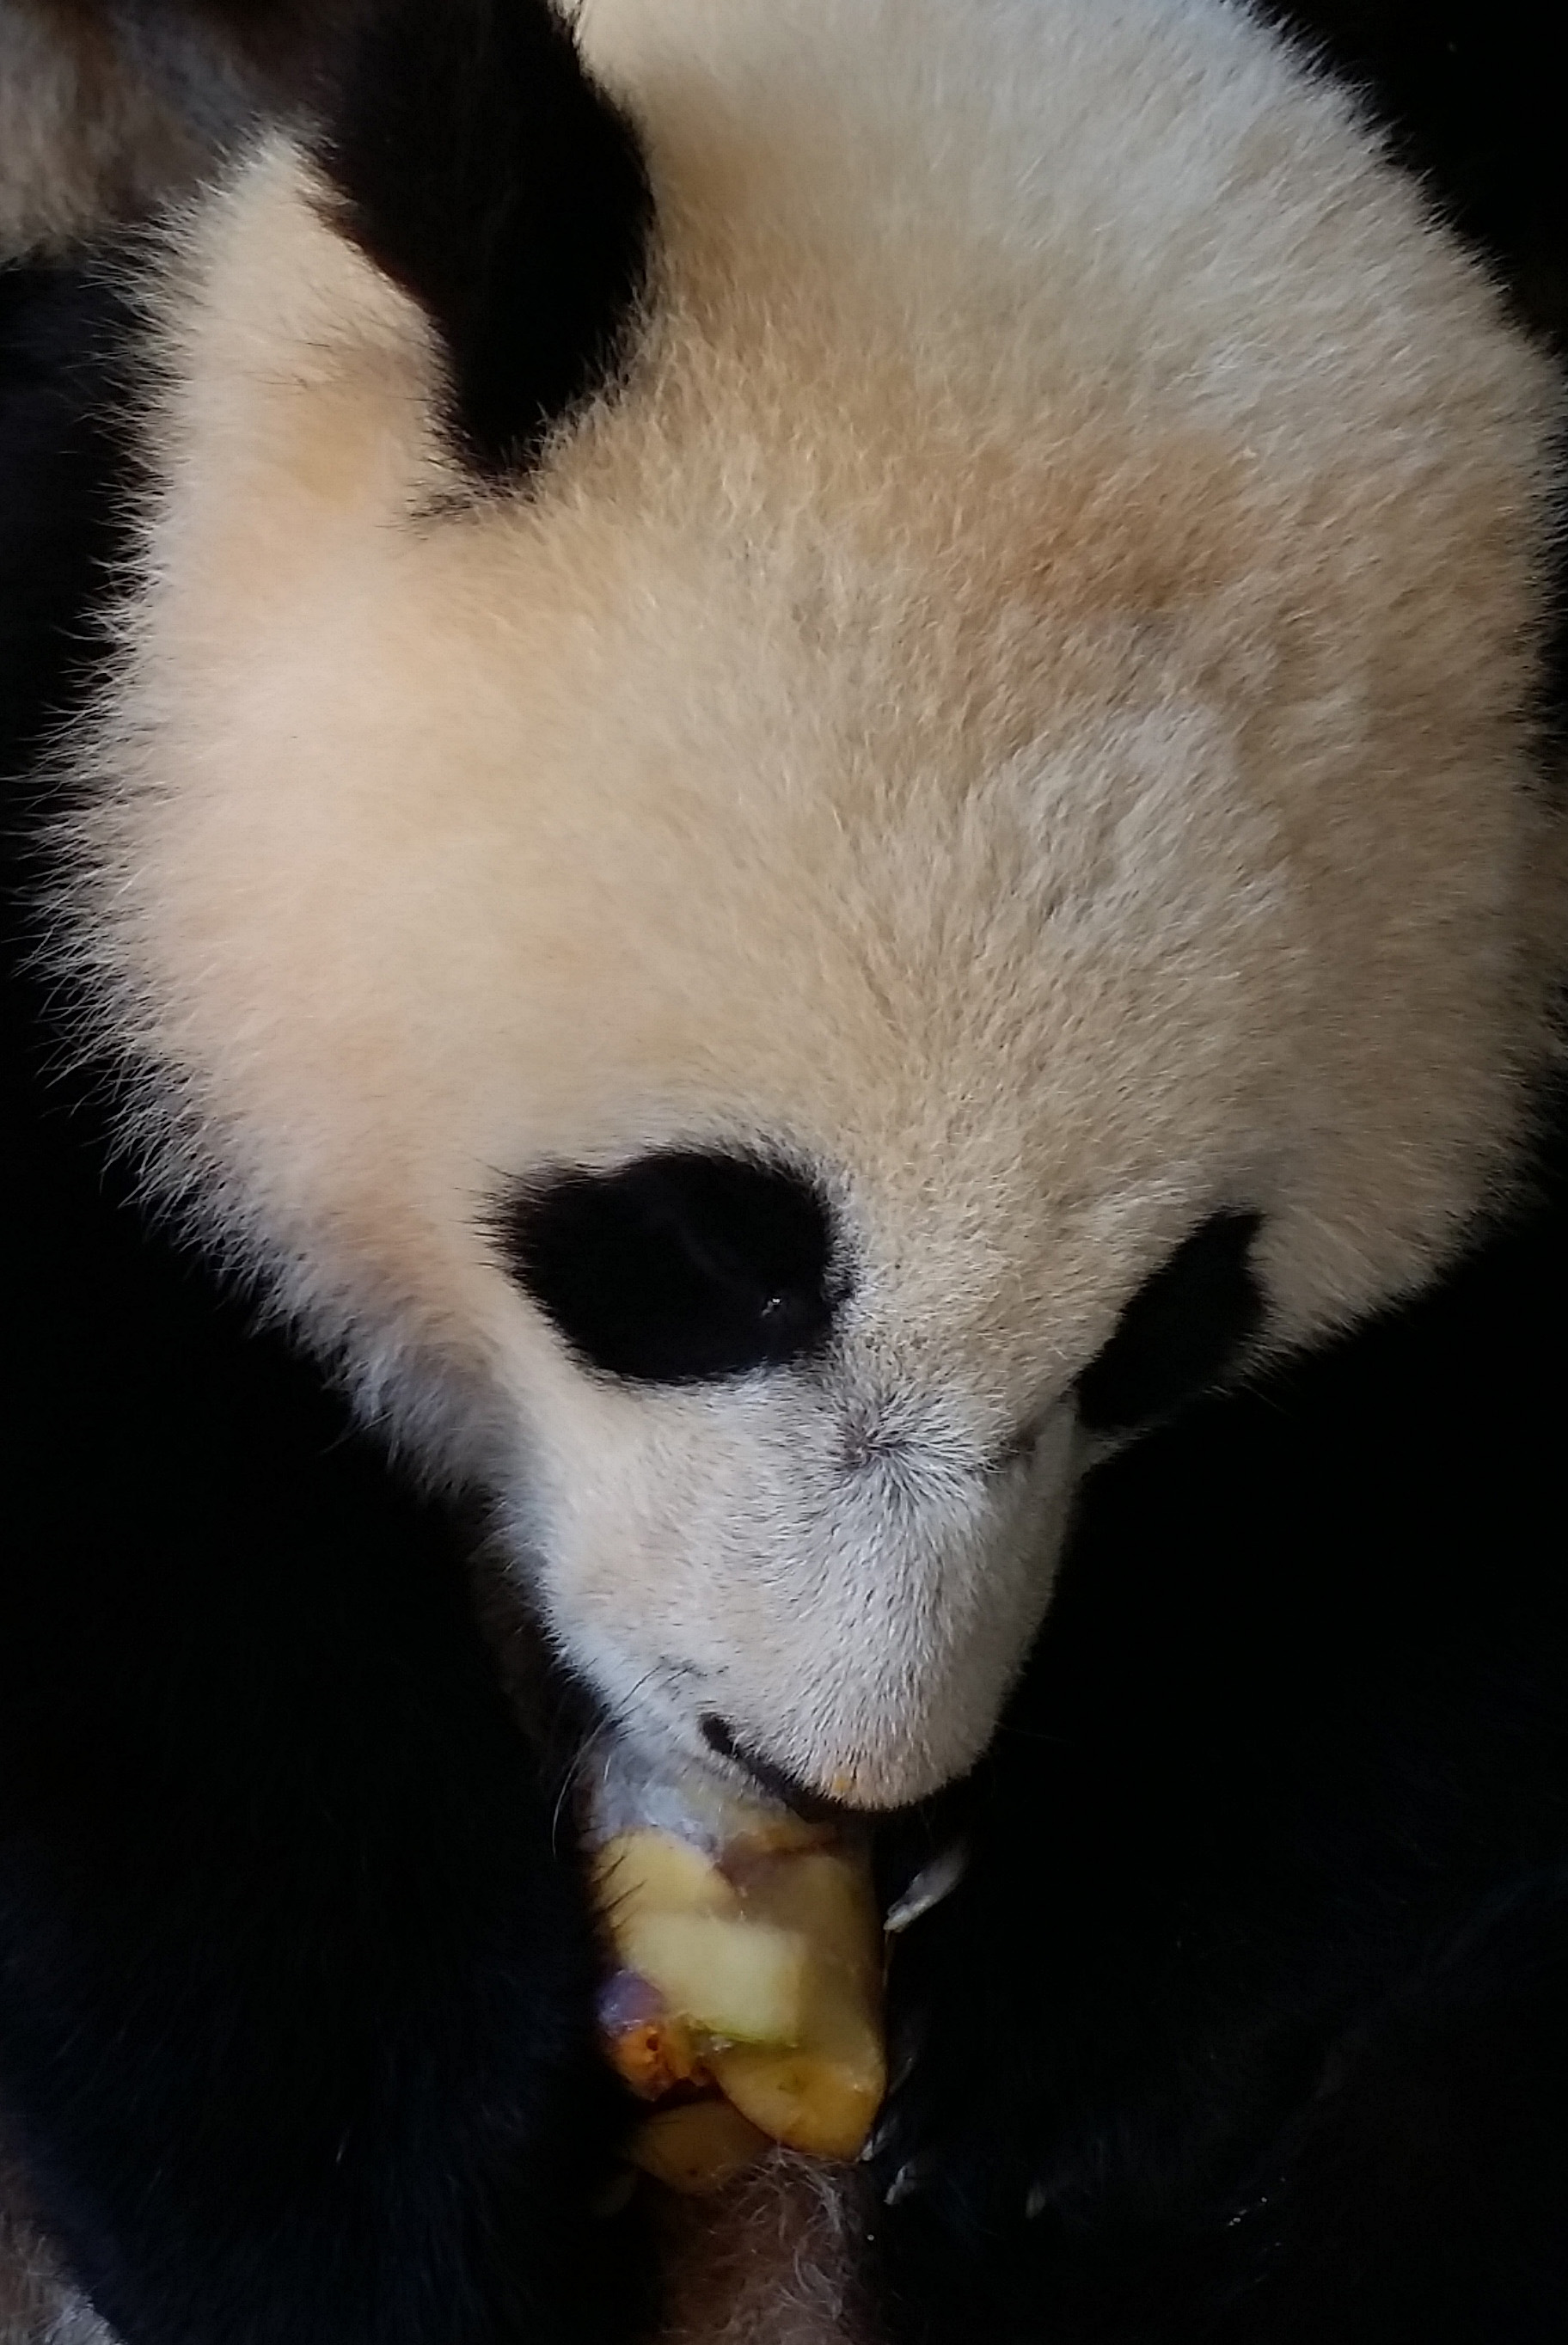 Giant panda Update Jul 14, 2014 | Smithsonian's National Zoo